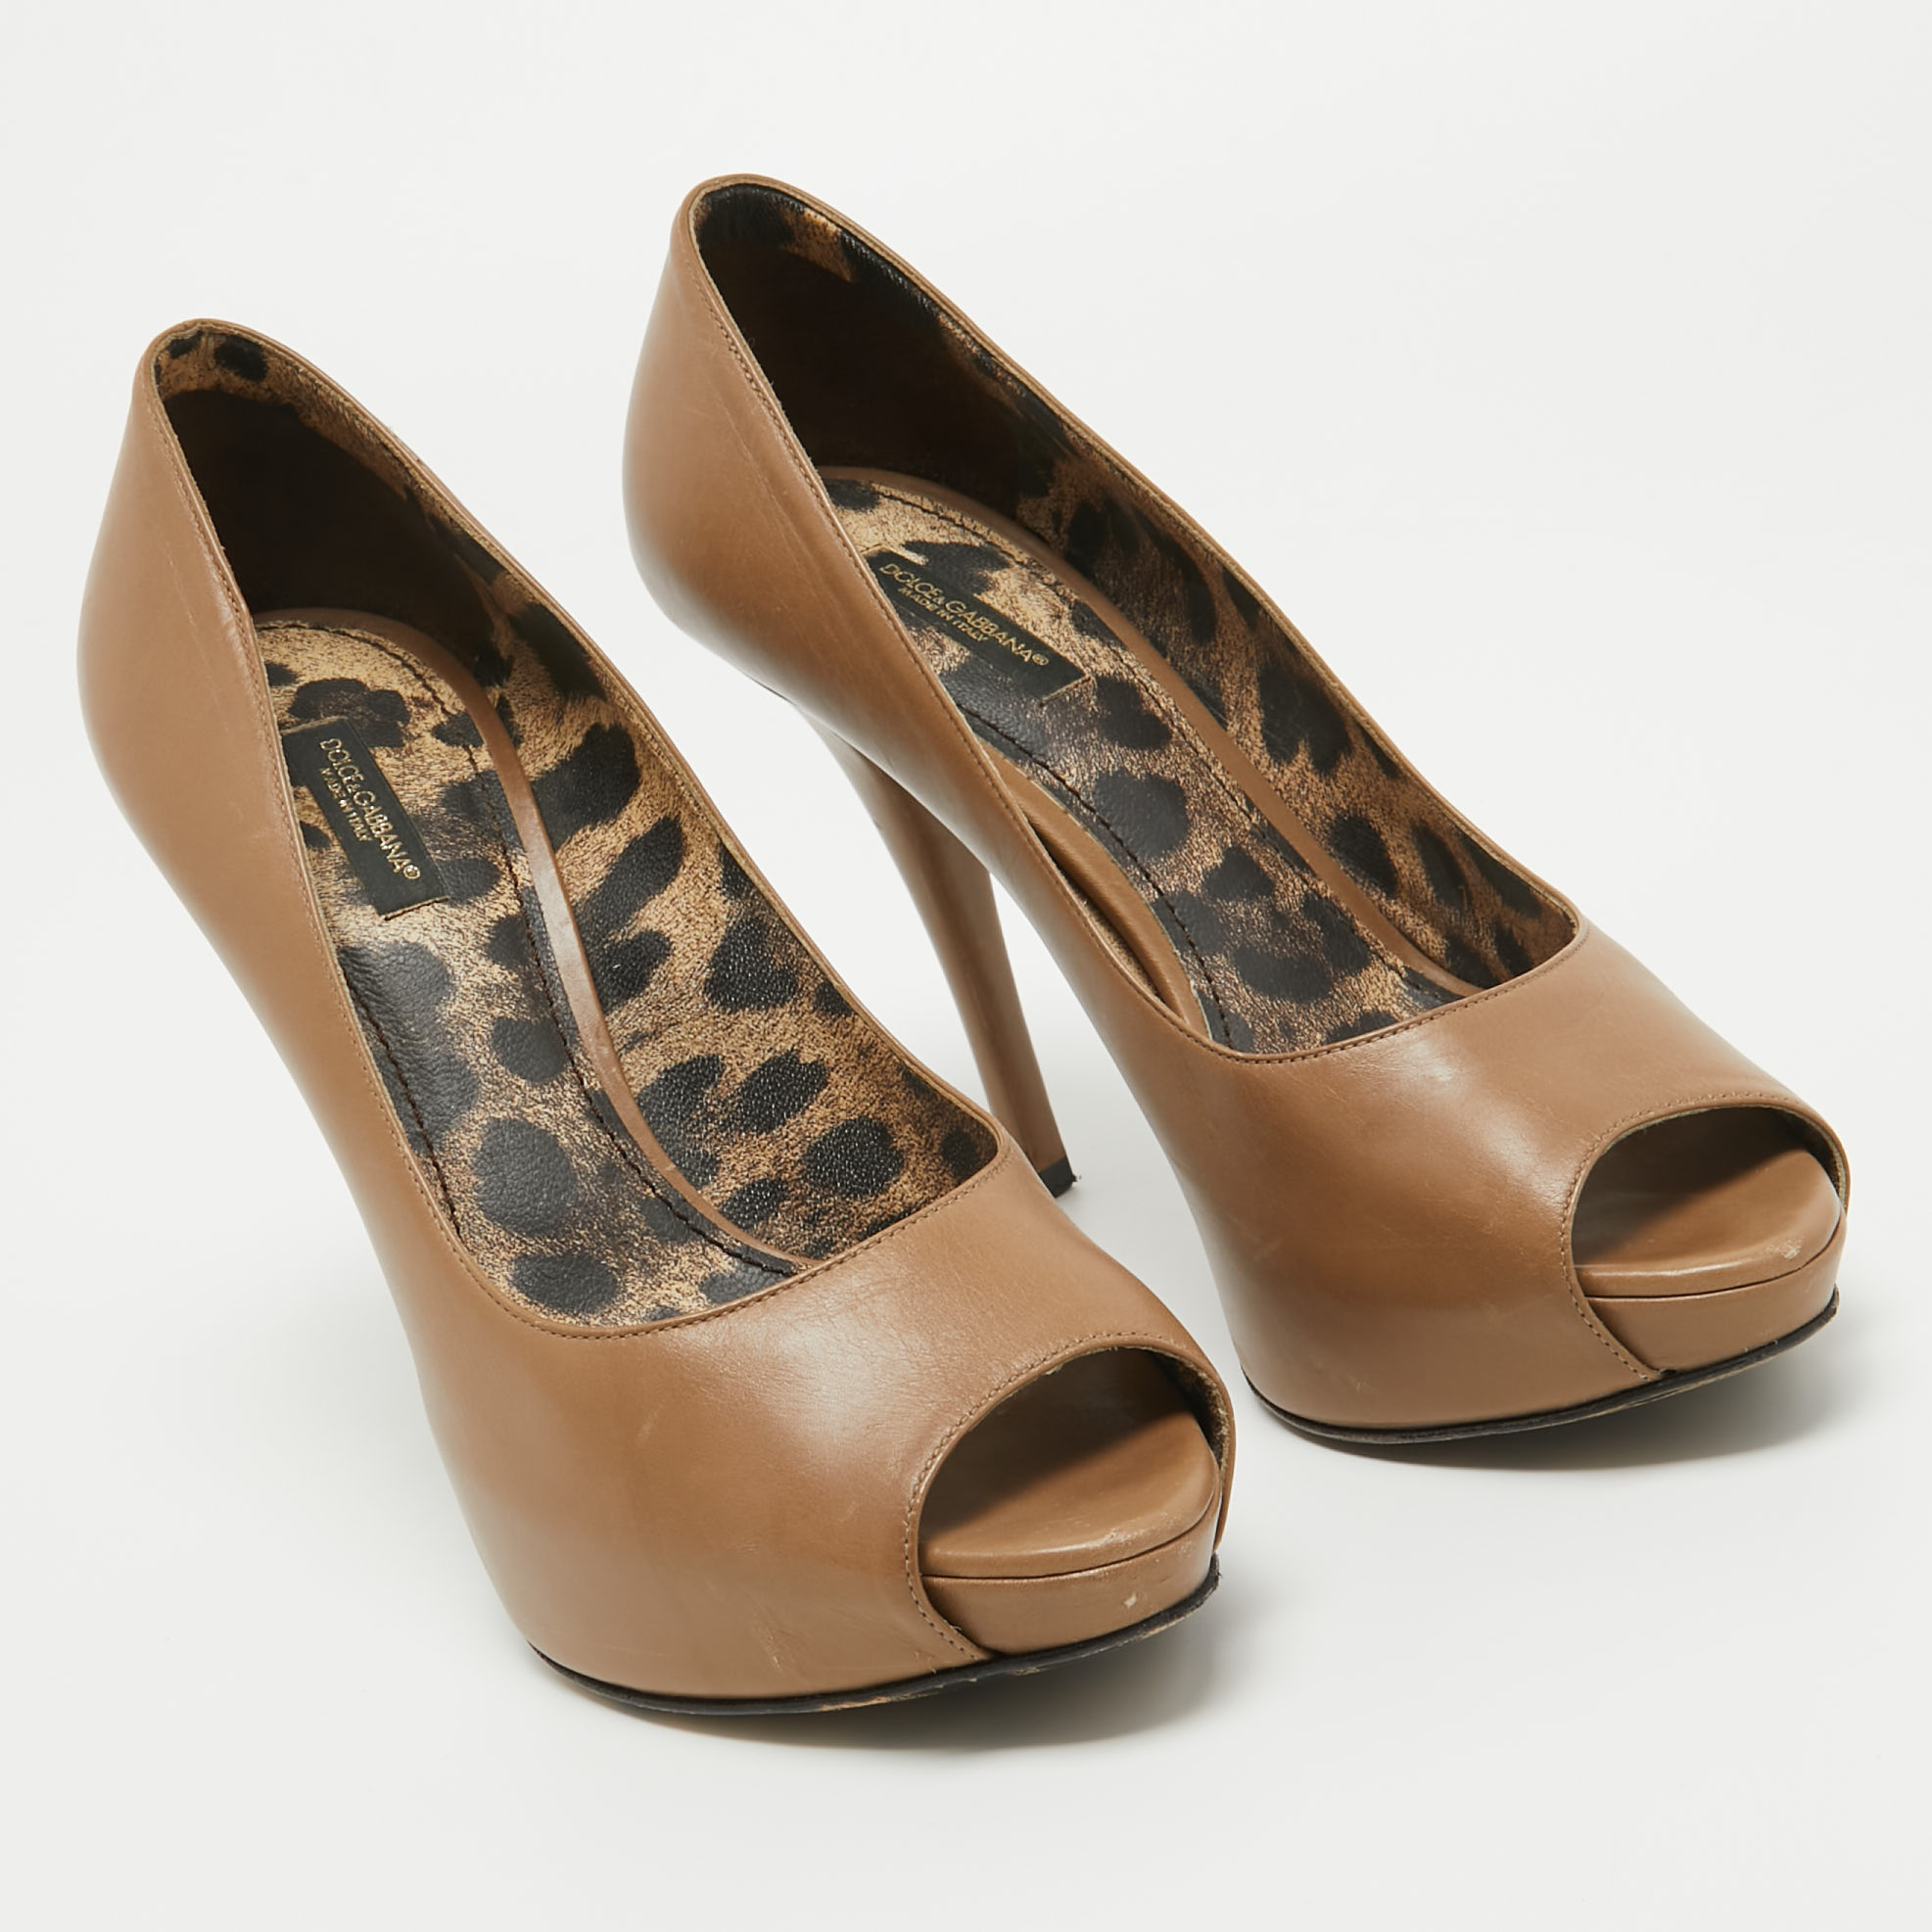 Dolce & Gabbana Light Brown Leather Peep Toe Platform Pumps Size 38.5